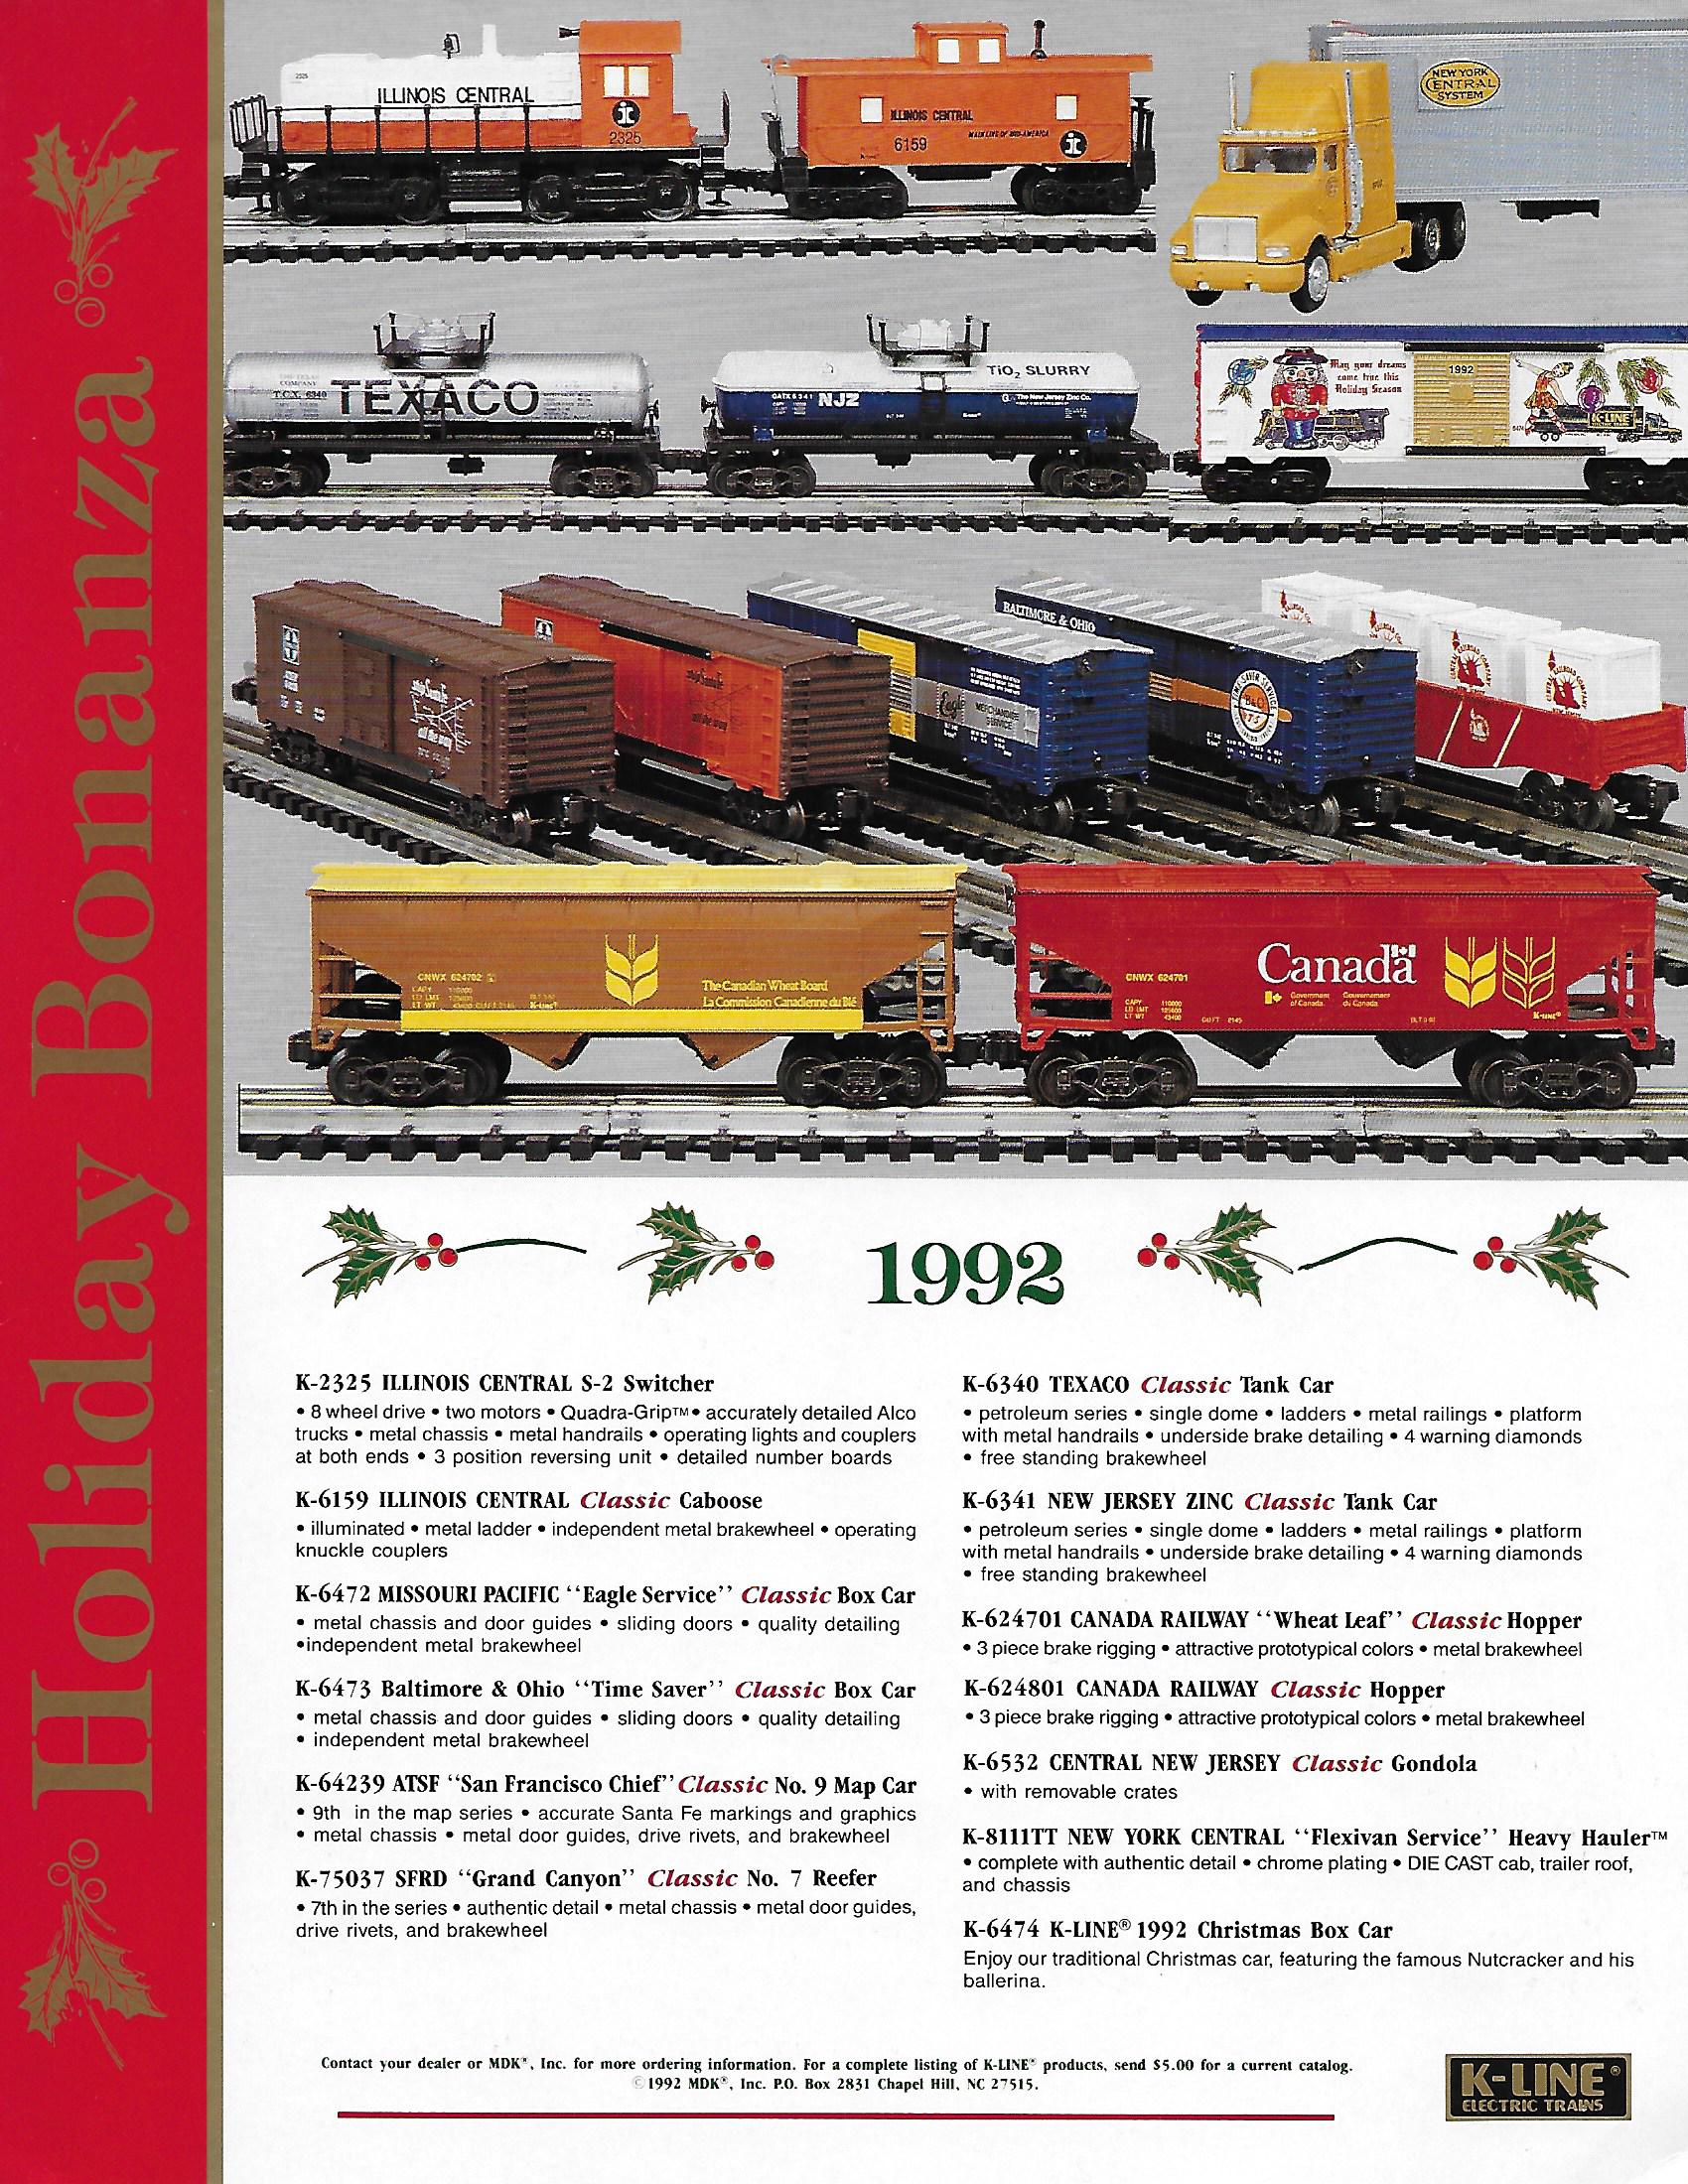 K-Line 1992 Holiday Bonanza (catalog) image